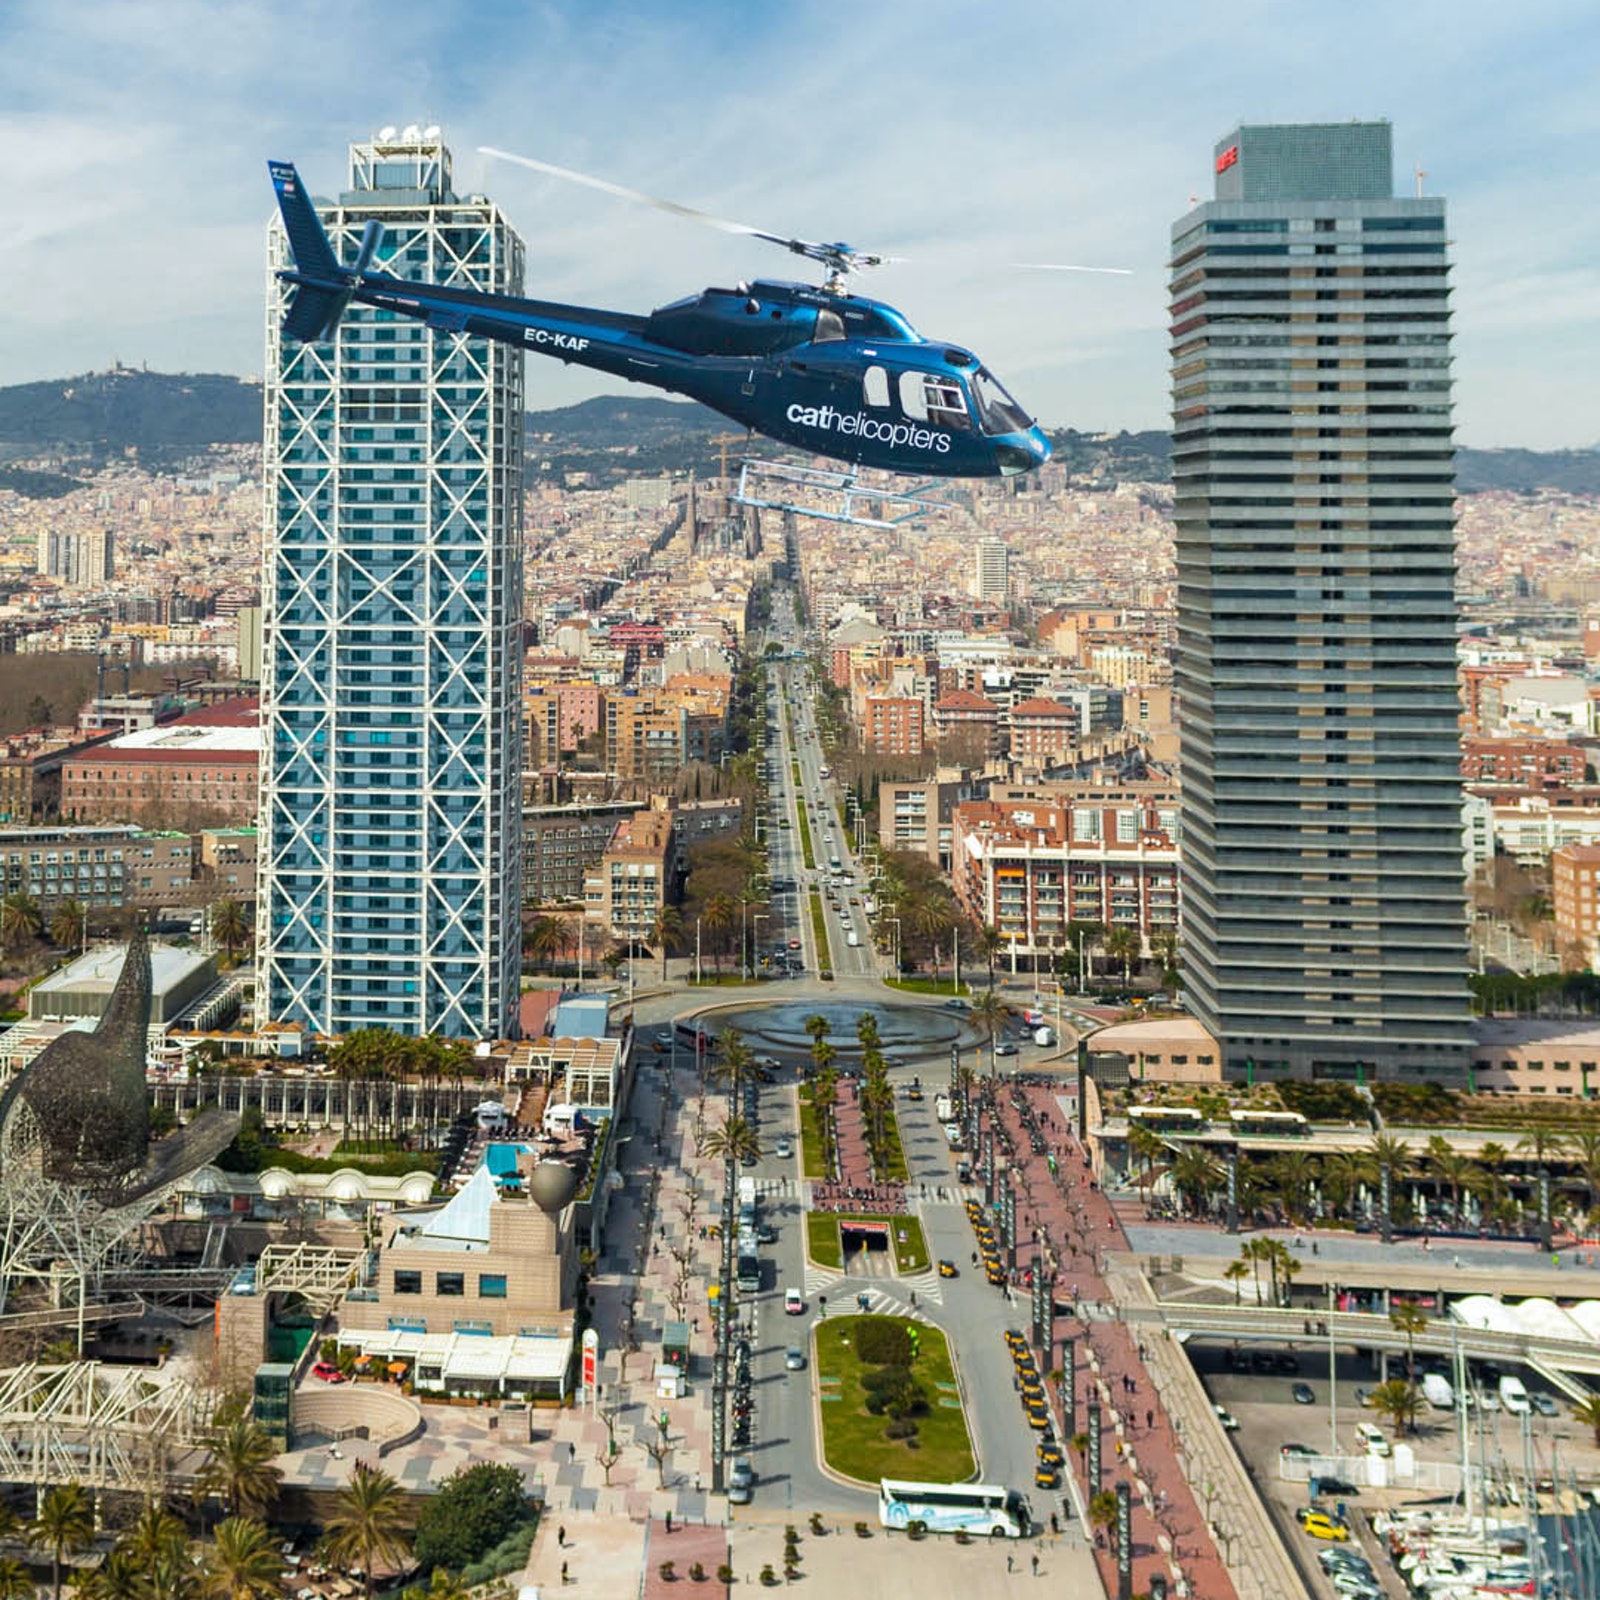 Barcelona Coast Helicopter Flight in Spain